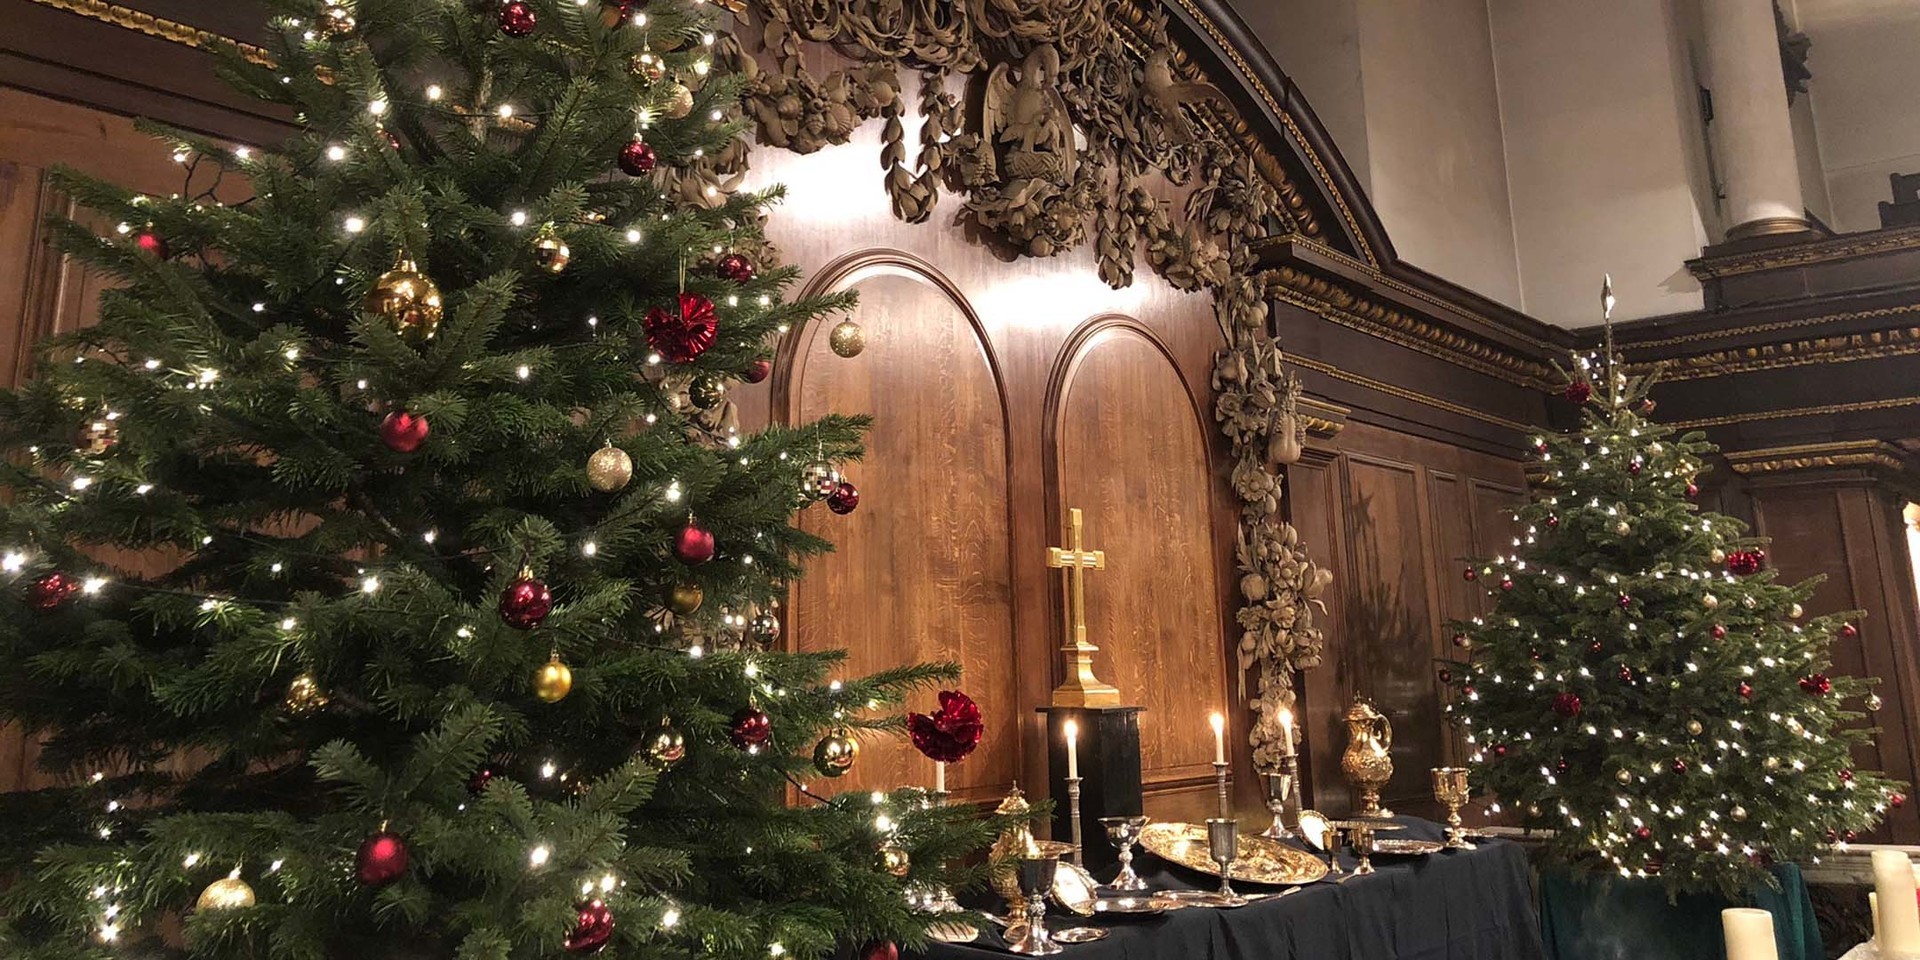 Messiah Choruses and Christmas Carols, London, England, United Kingdom